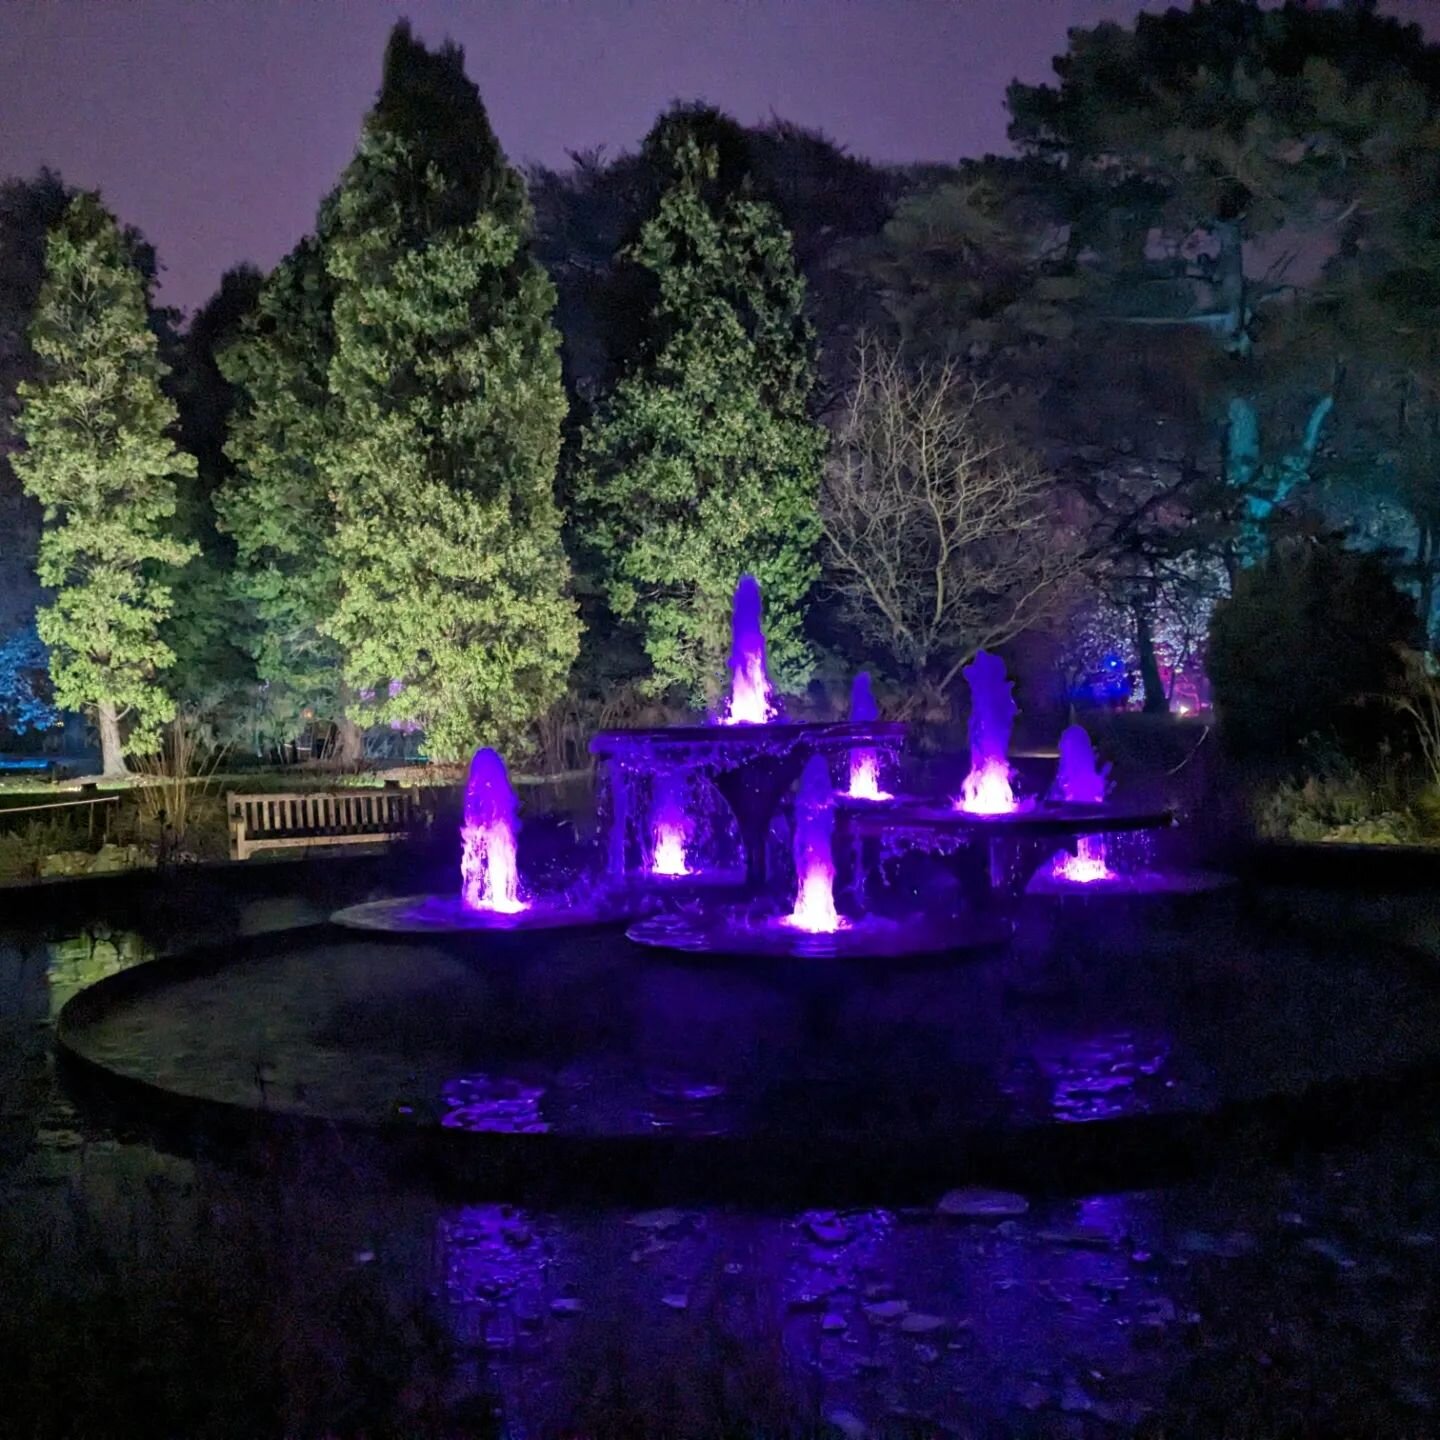 Beautiful night enjoying the Christmas Lights at Cambridge Botanical Gardens